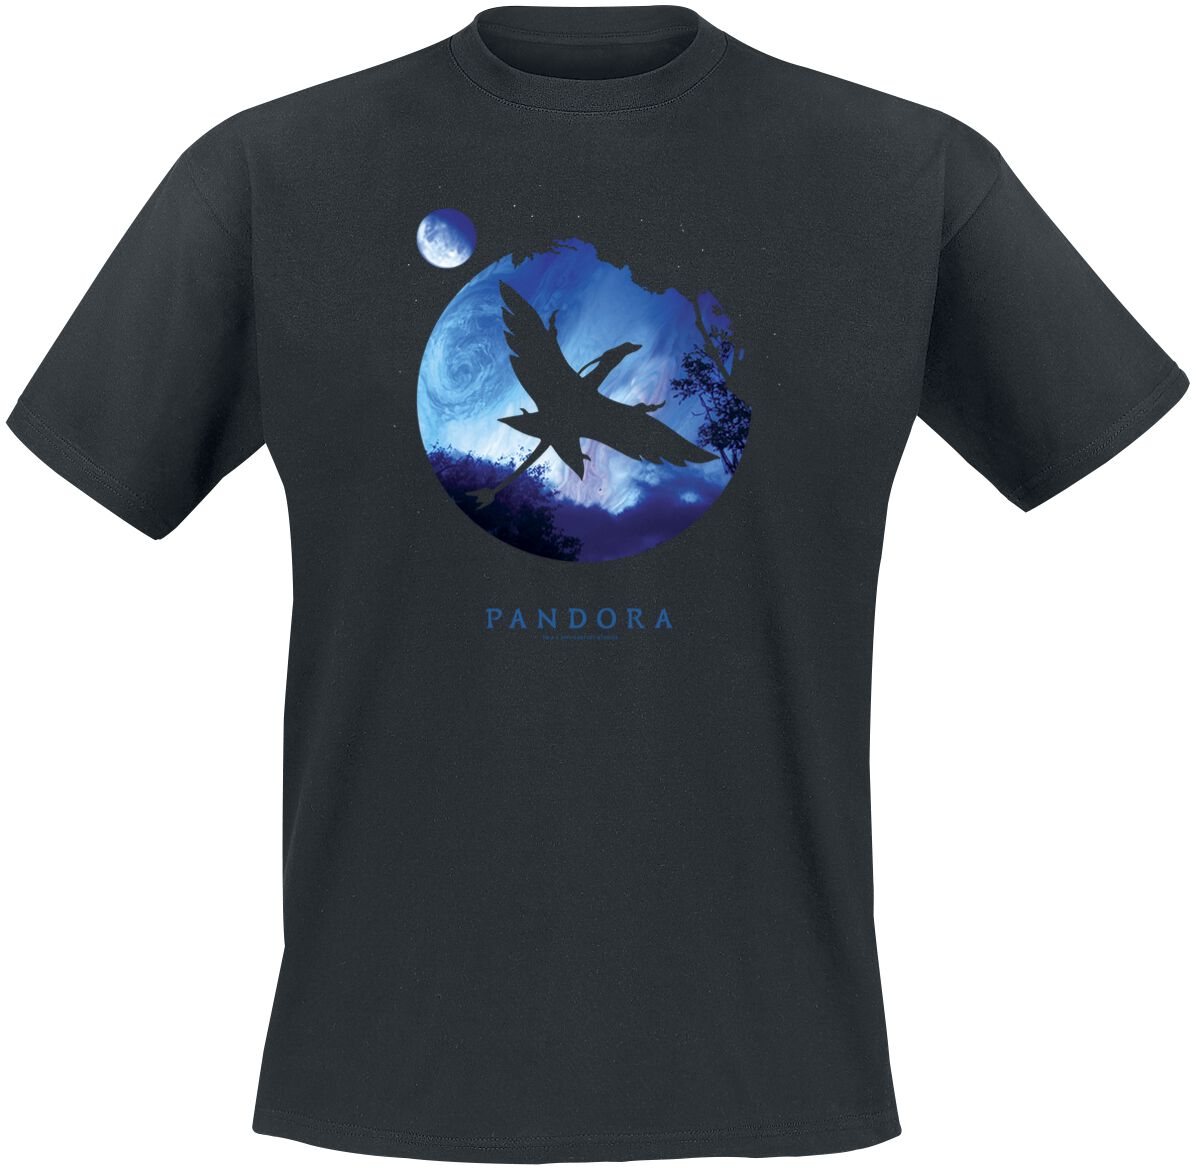 Avatar (Film) Pandora planets T-Shirt black